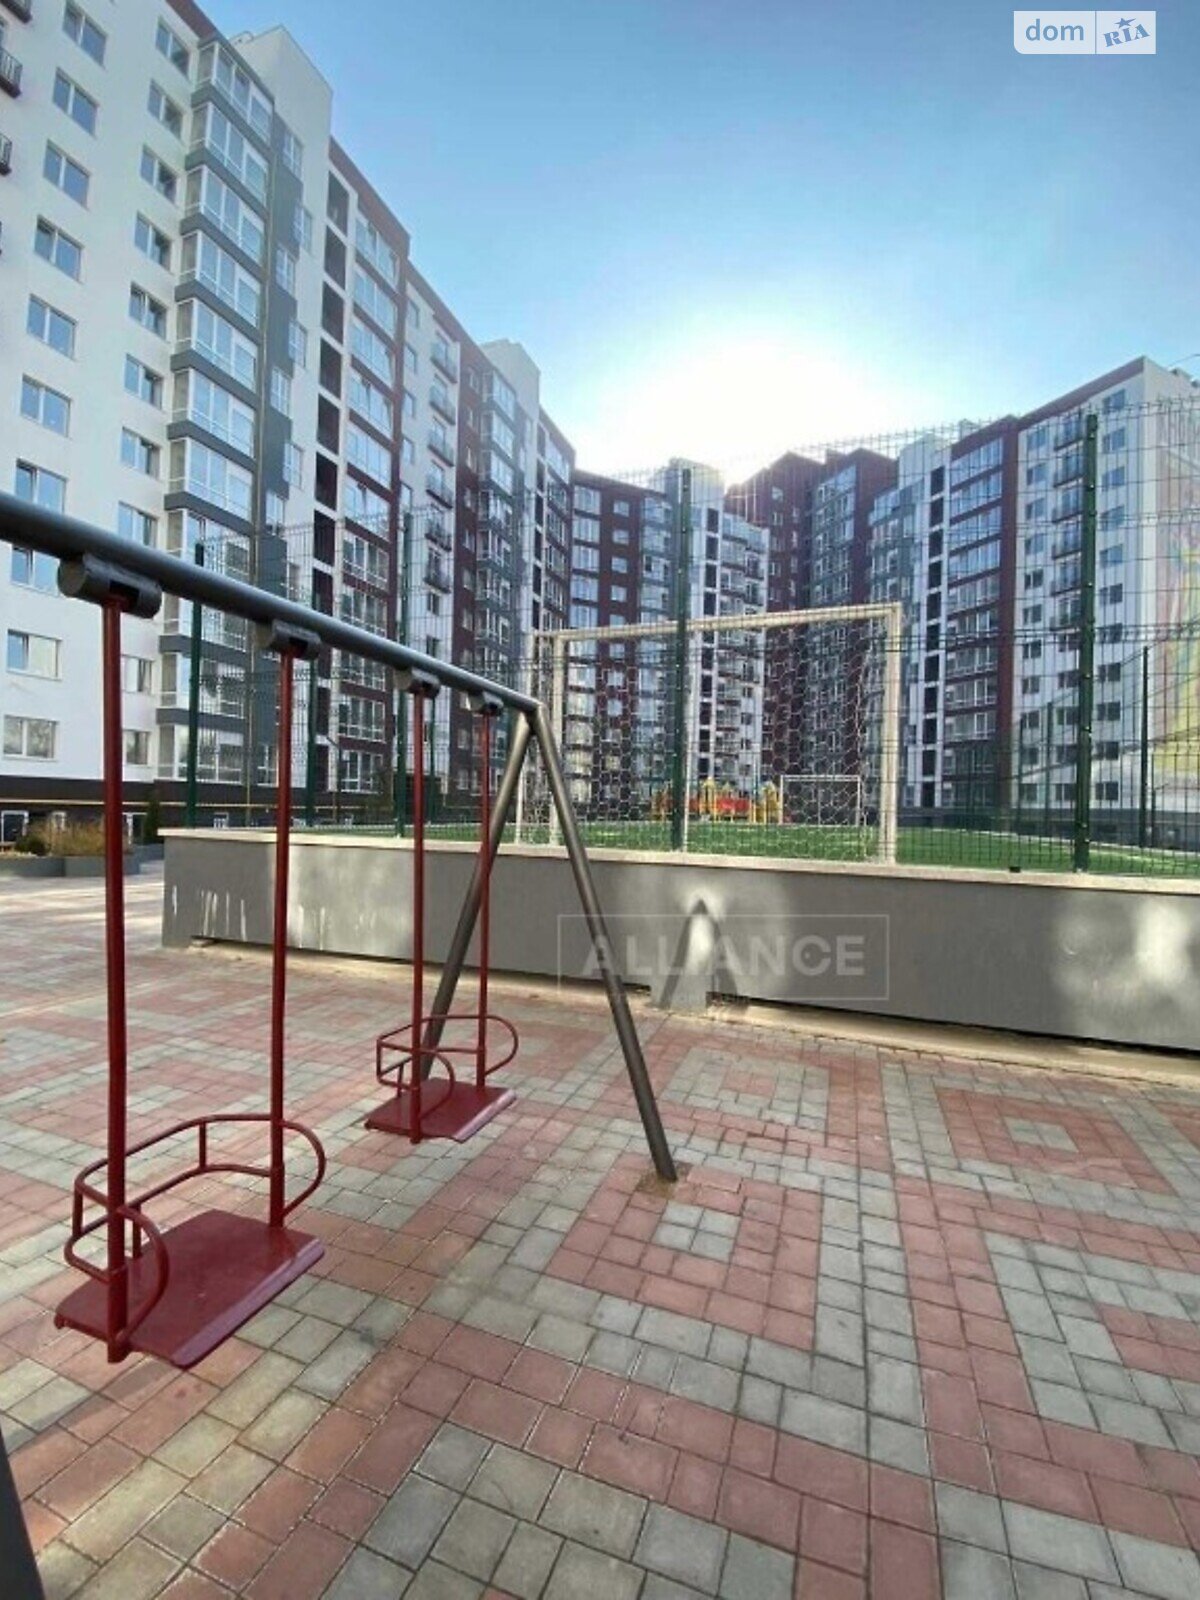 Продажа однокомнатной квартиры в Ивано-Франковске, на ул. Княгинин, район Княгинин фото 1